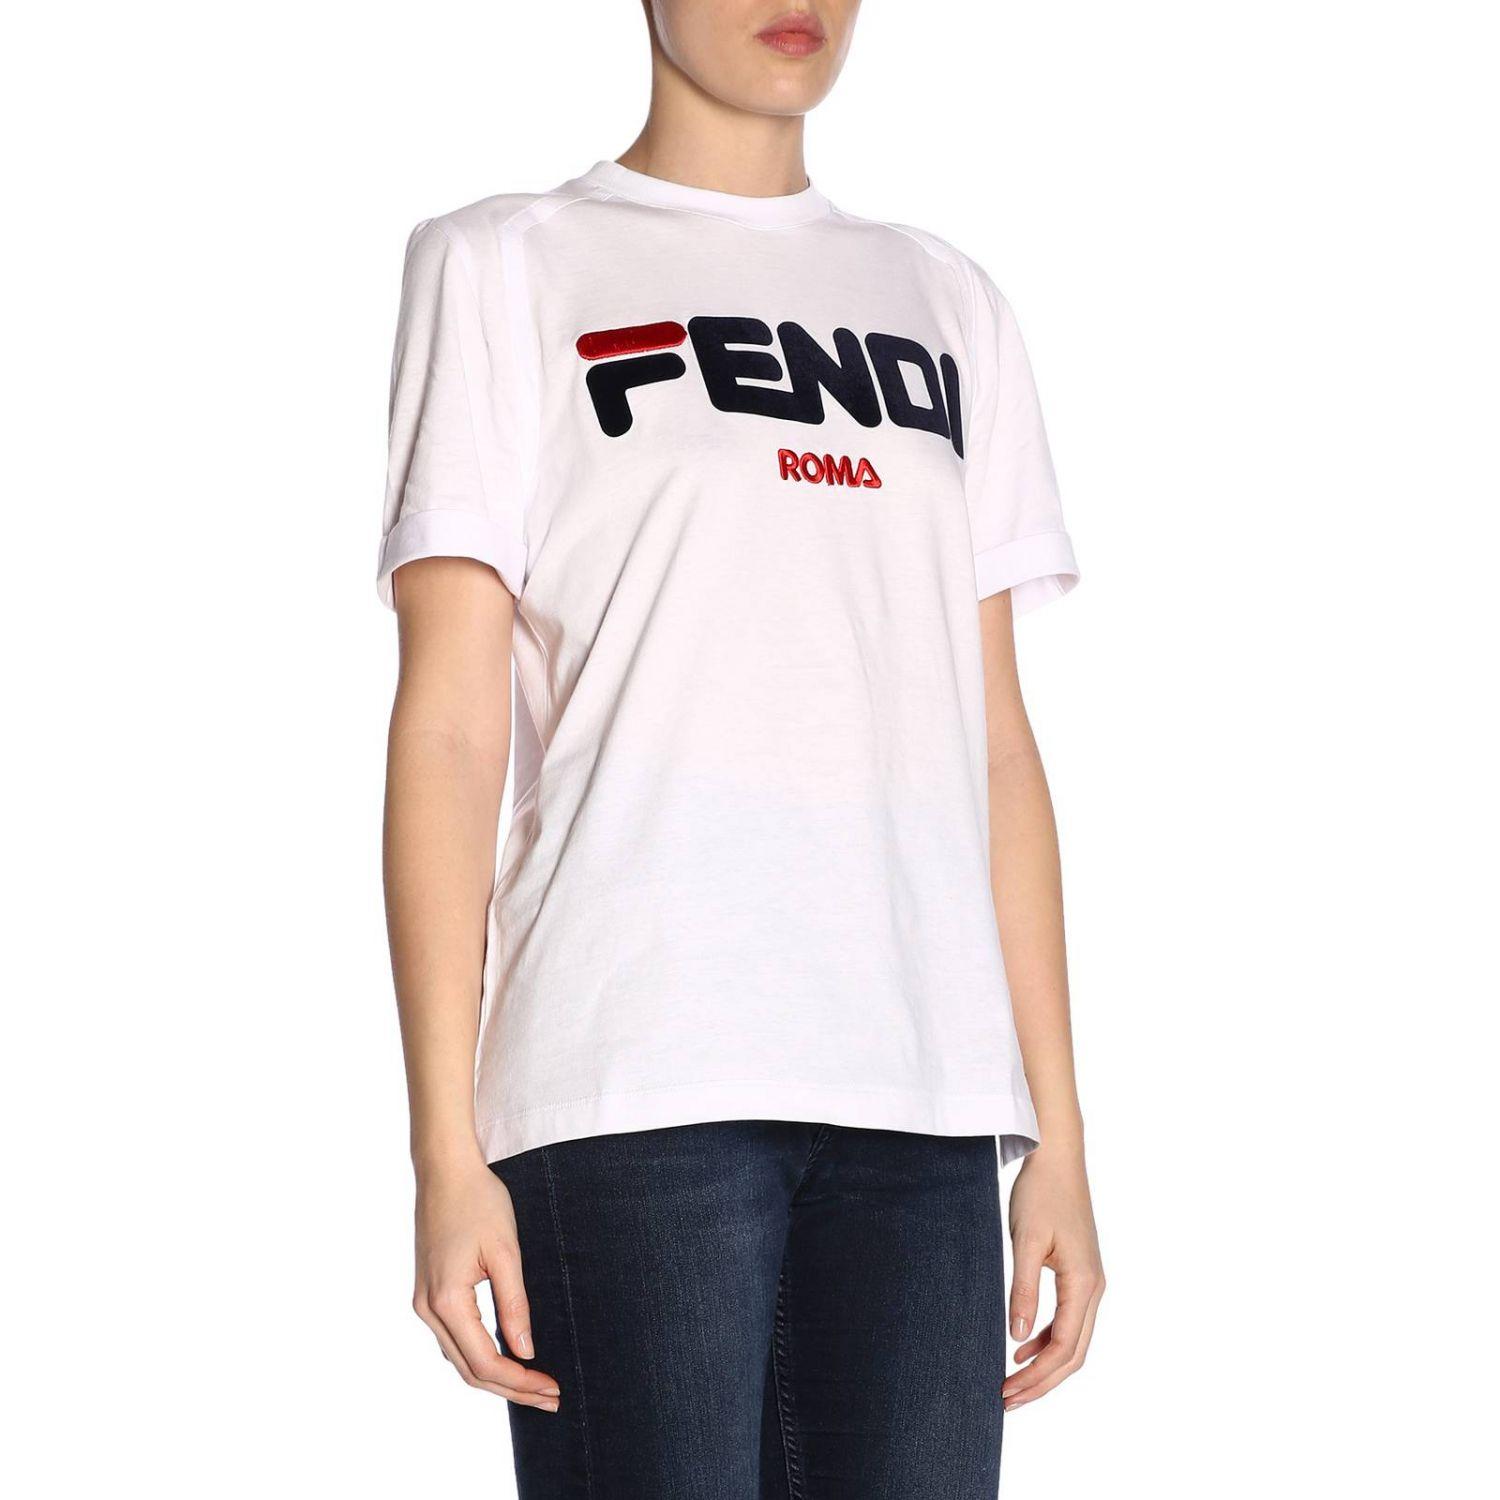 Fendi T Shirt Women Deals, 57% OFF | www.ingeniovirtual.com